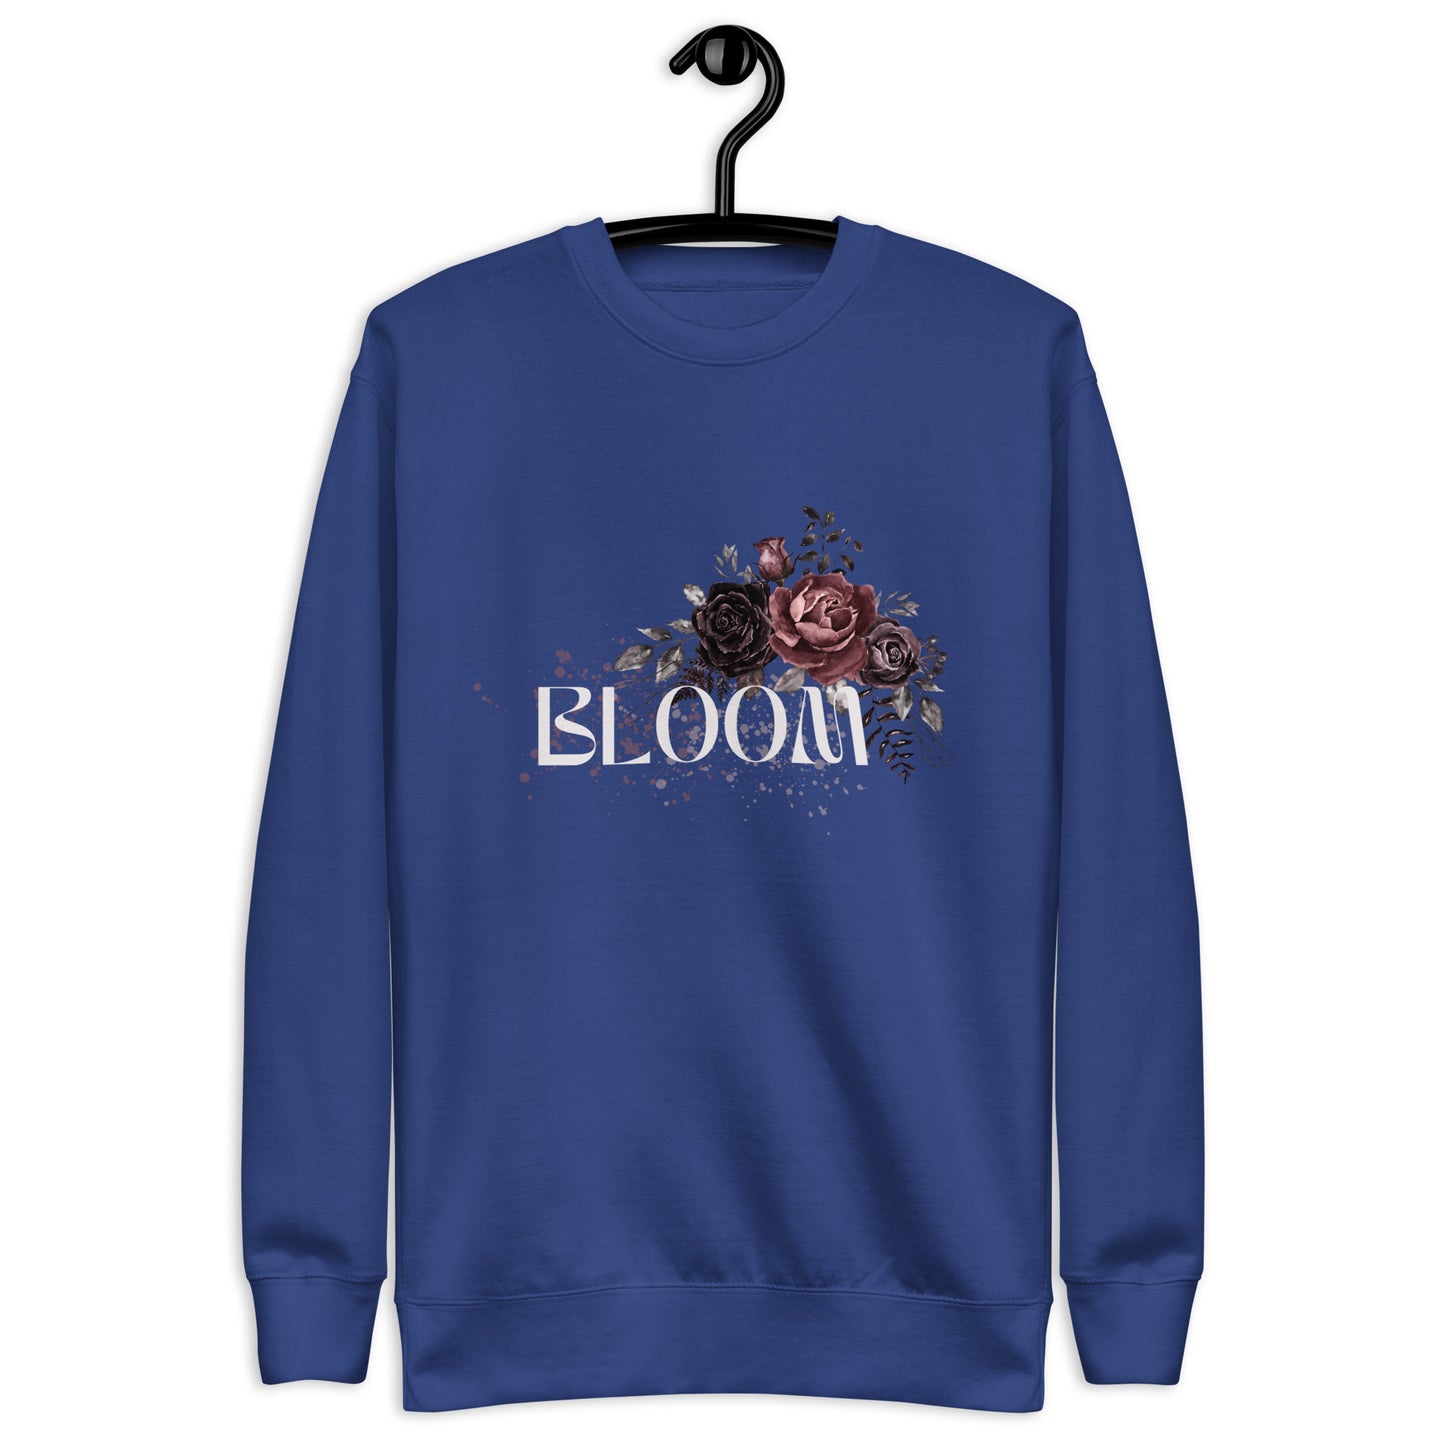 BLOOM 2 Sweatshirt